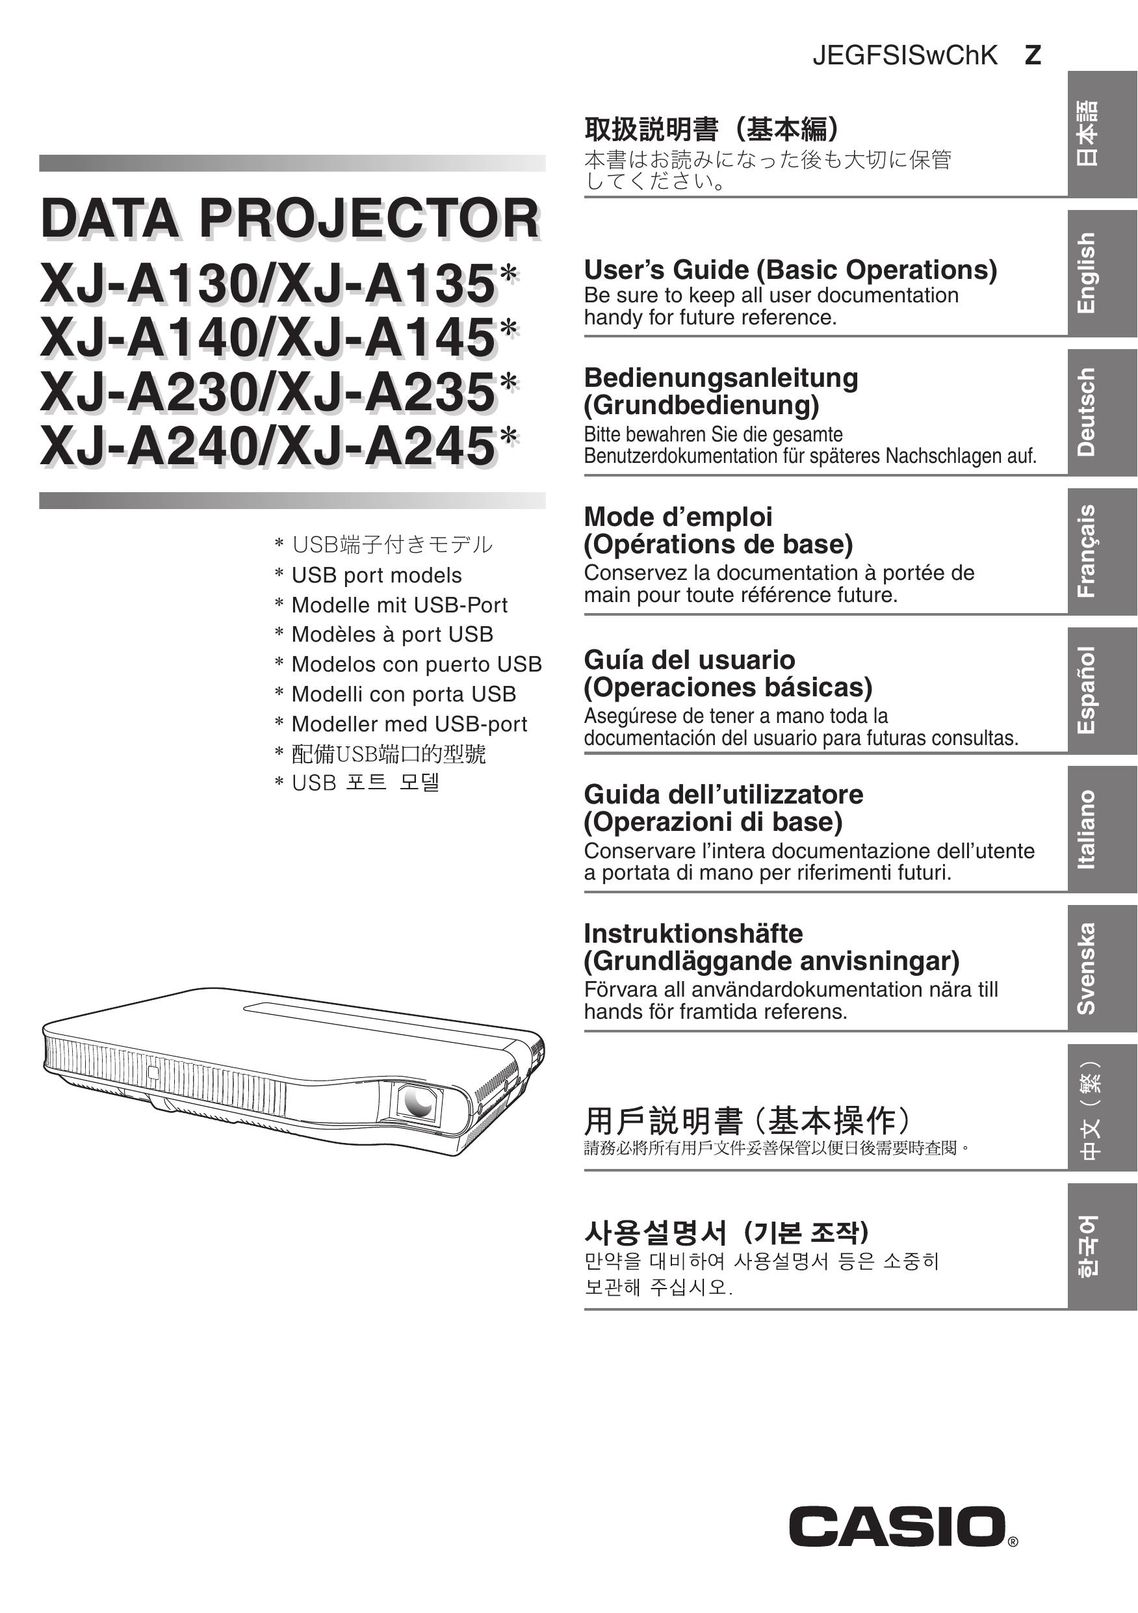 Casio XJ-A140 Projector User Manual